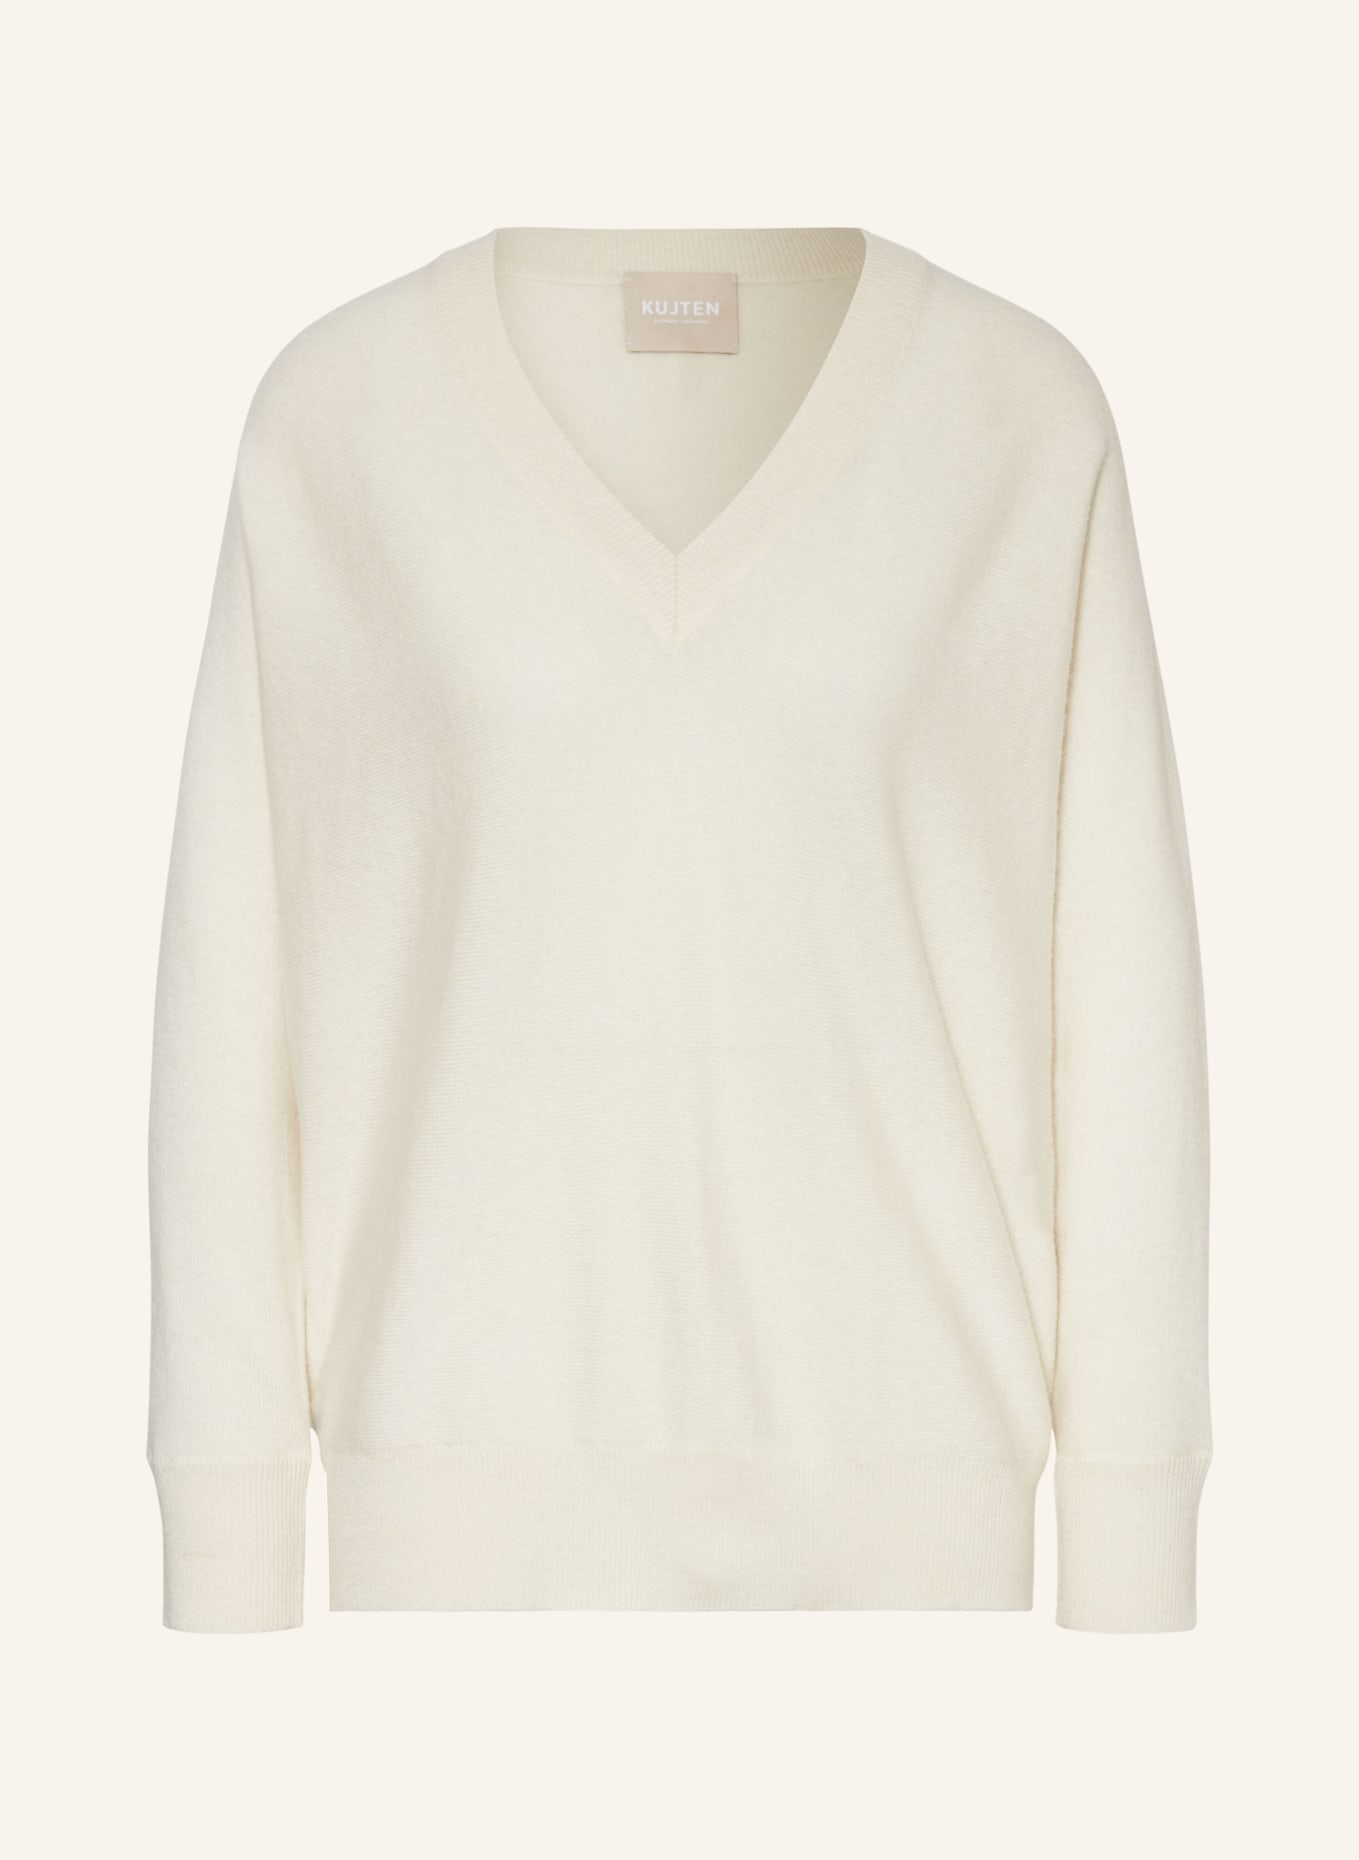 KUJTEN Cashmere-Pullover, Farbe: ECRU (Bild 1)